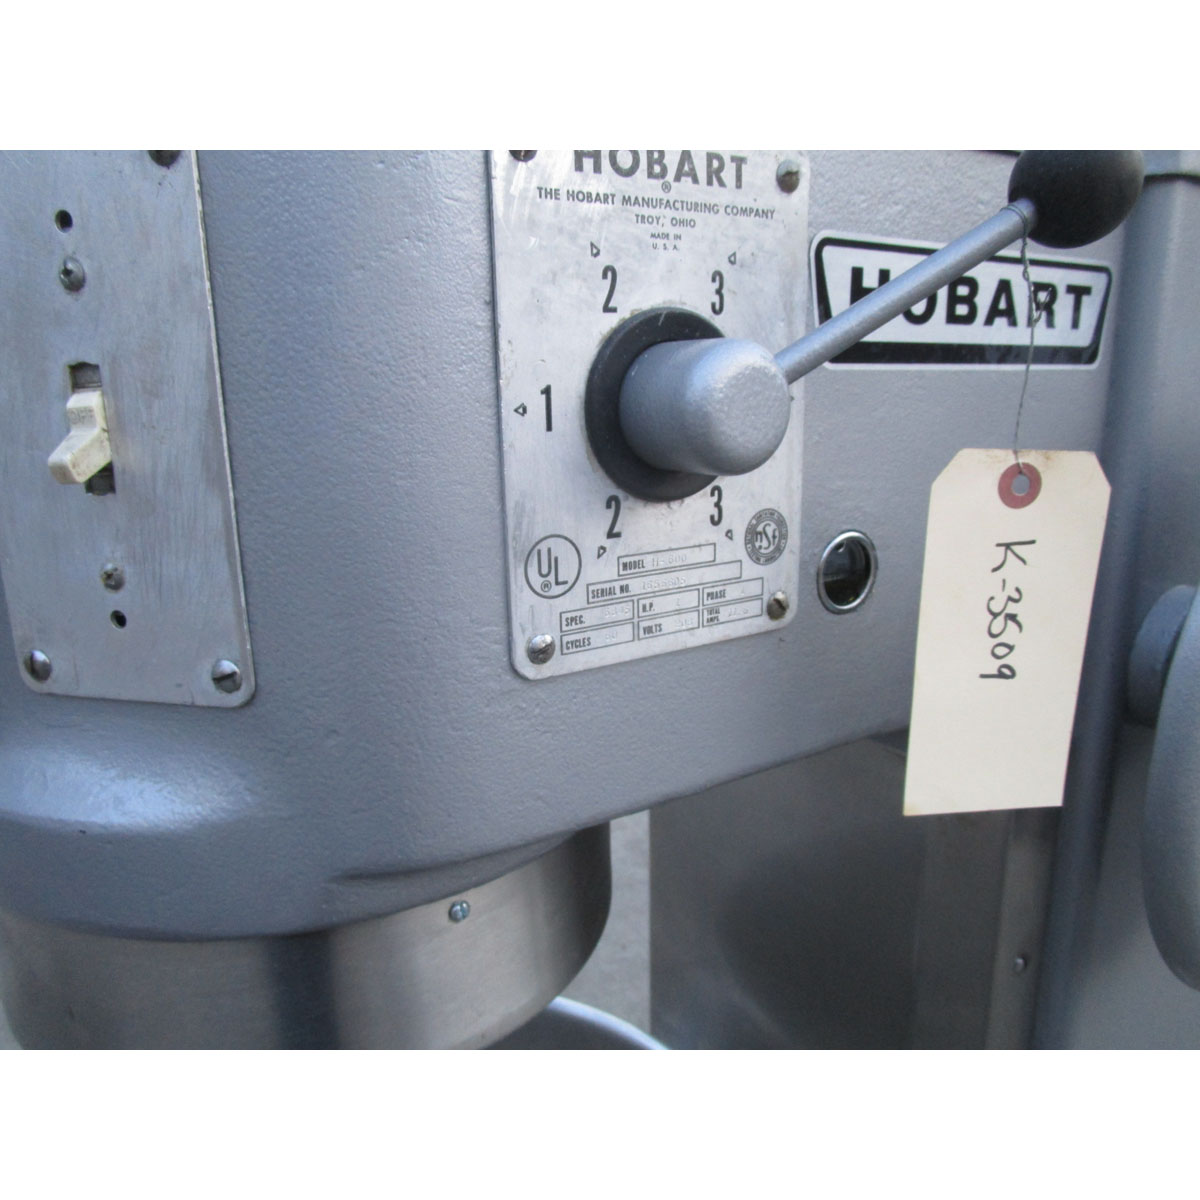 Hobart 60 Quart H600 Mixer, Excellent Condition image 3